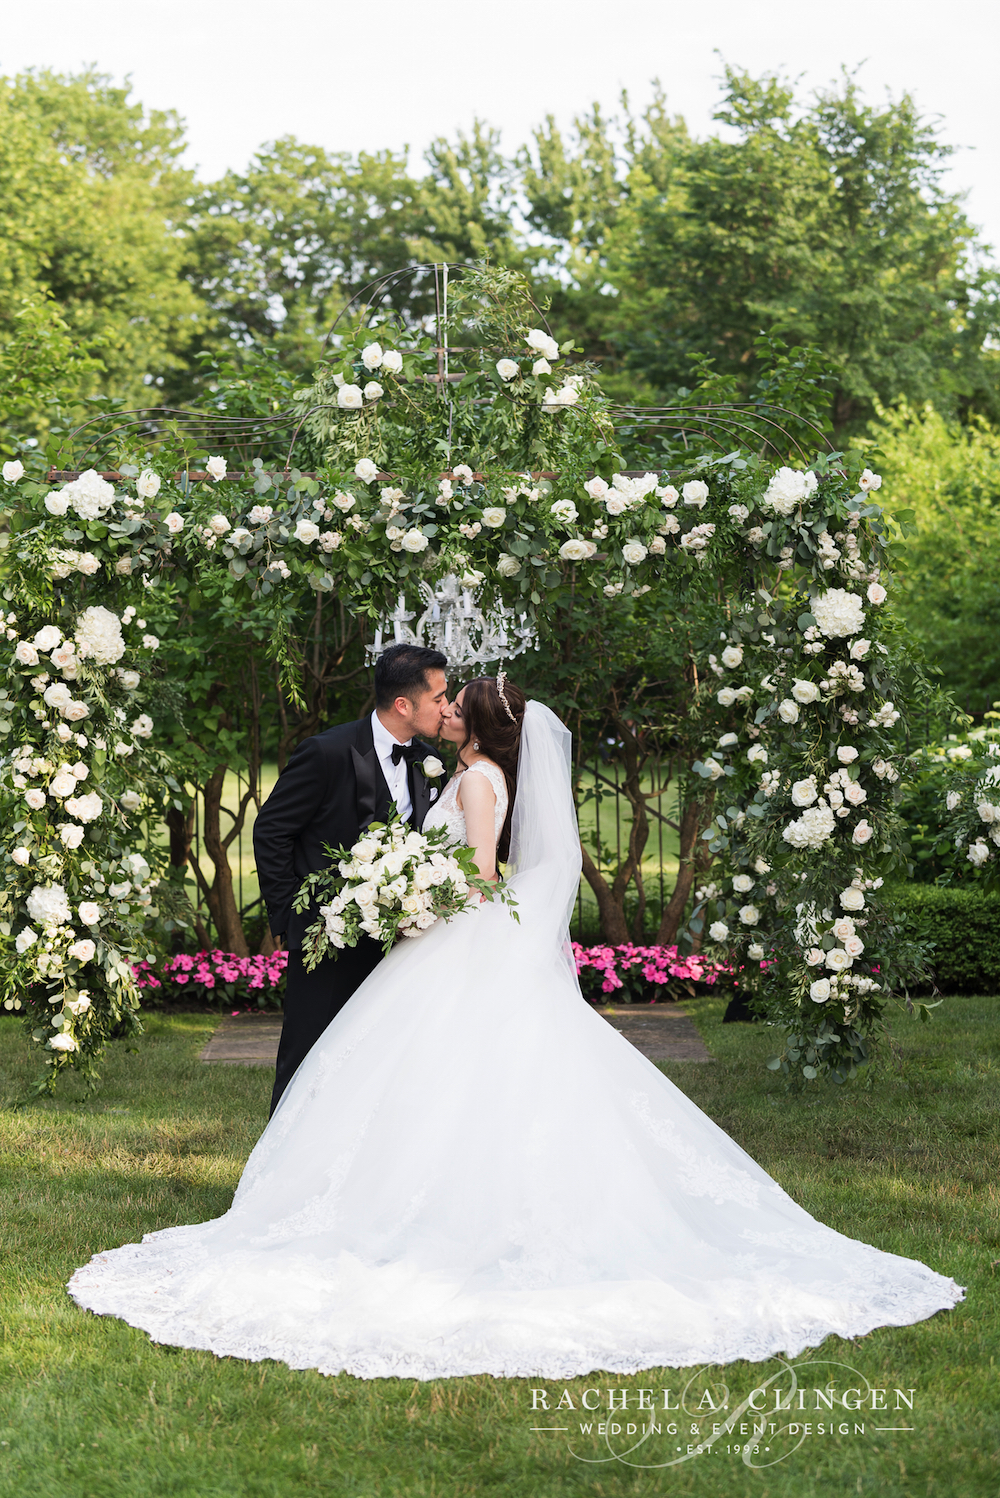 Wayne And Crystal Simmonds Modern Wedding At Four Seasons Toronto - Rachel  A. Clingen Wedding & Event Design